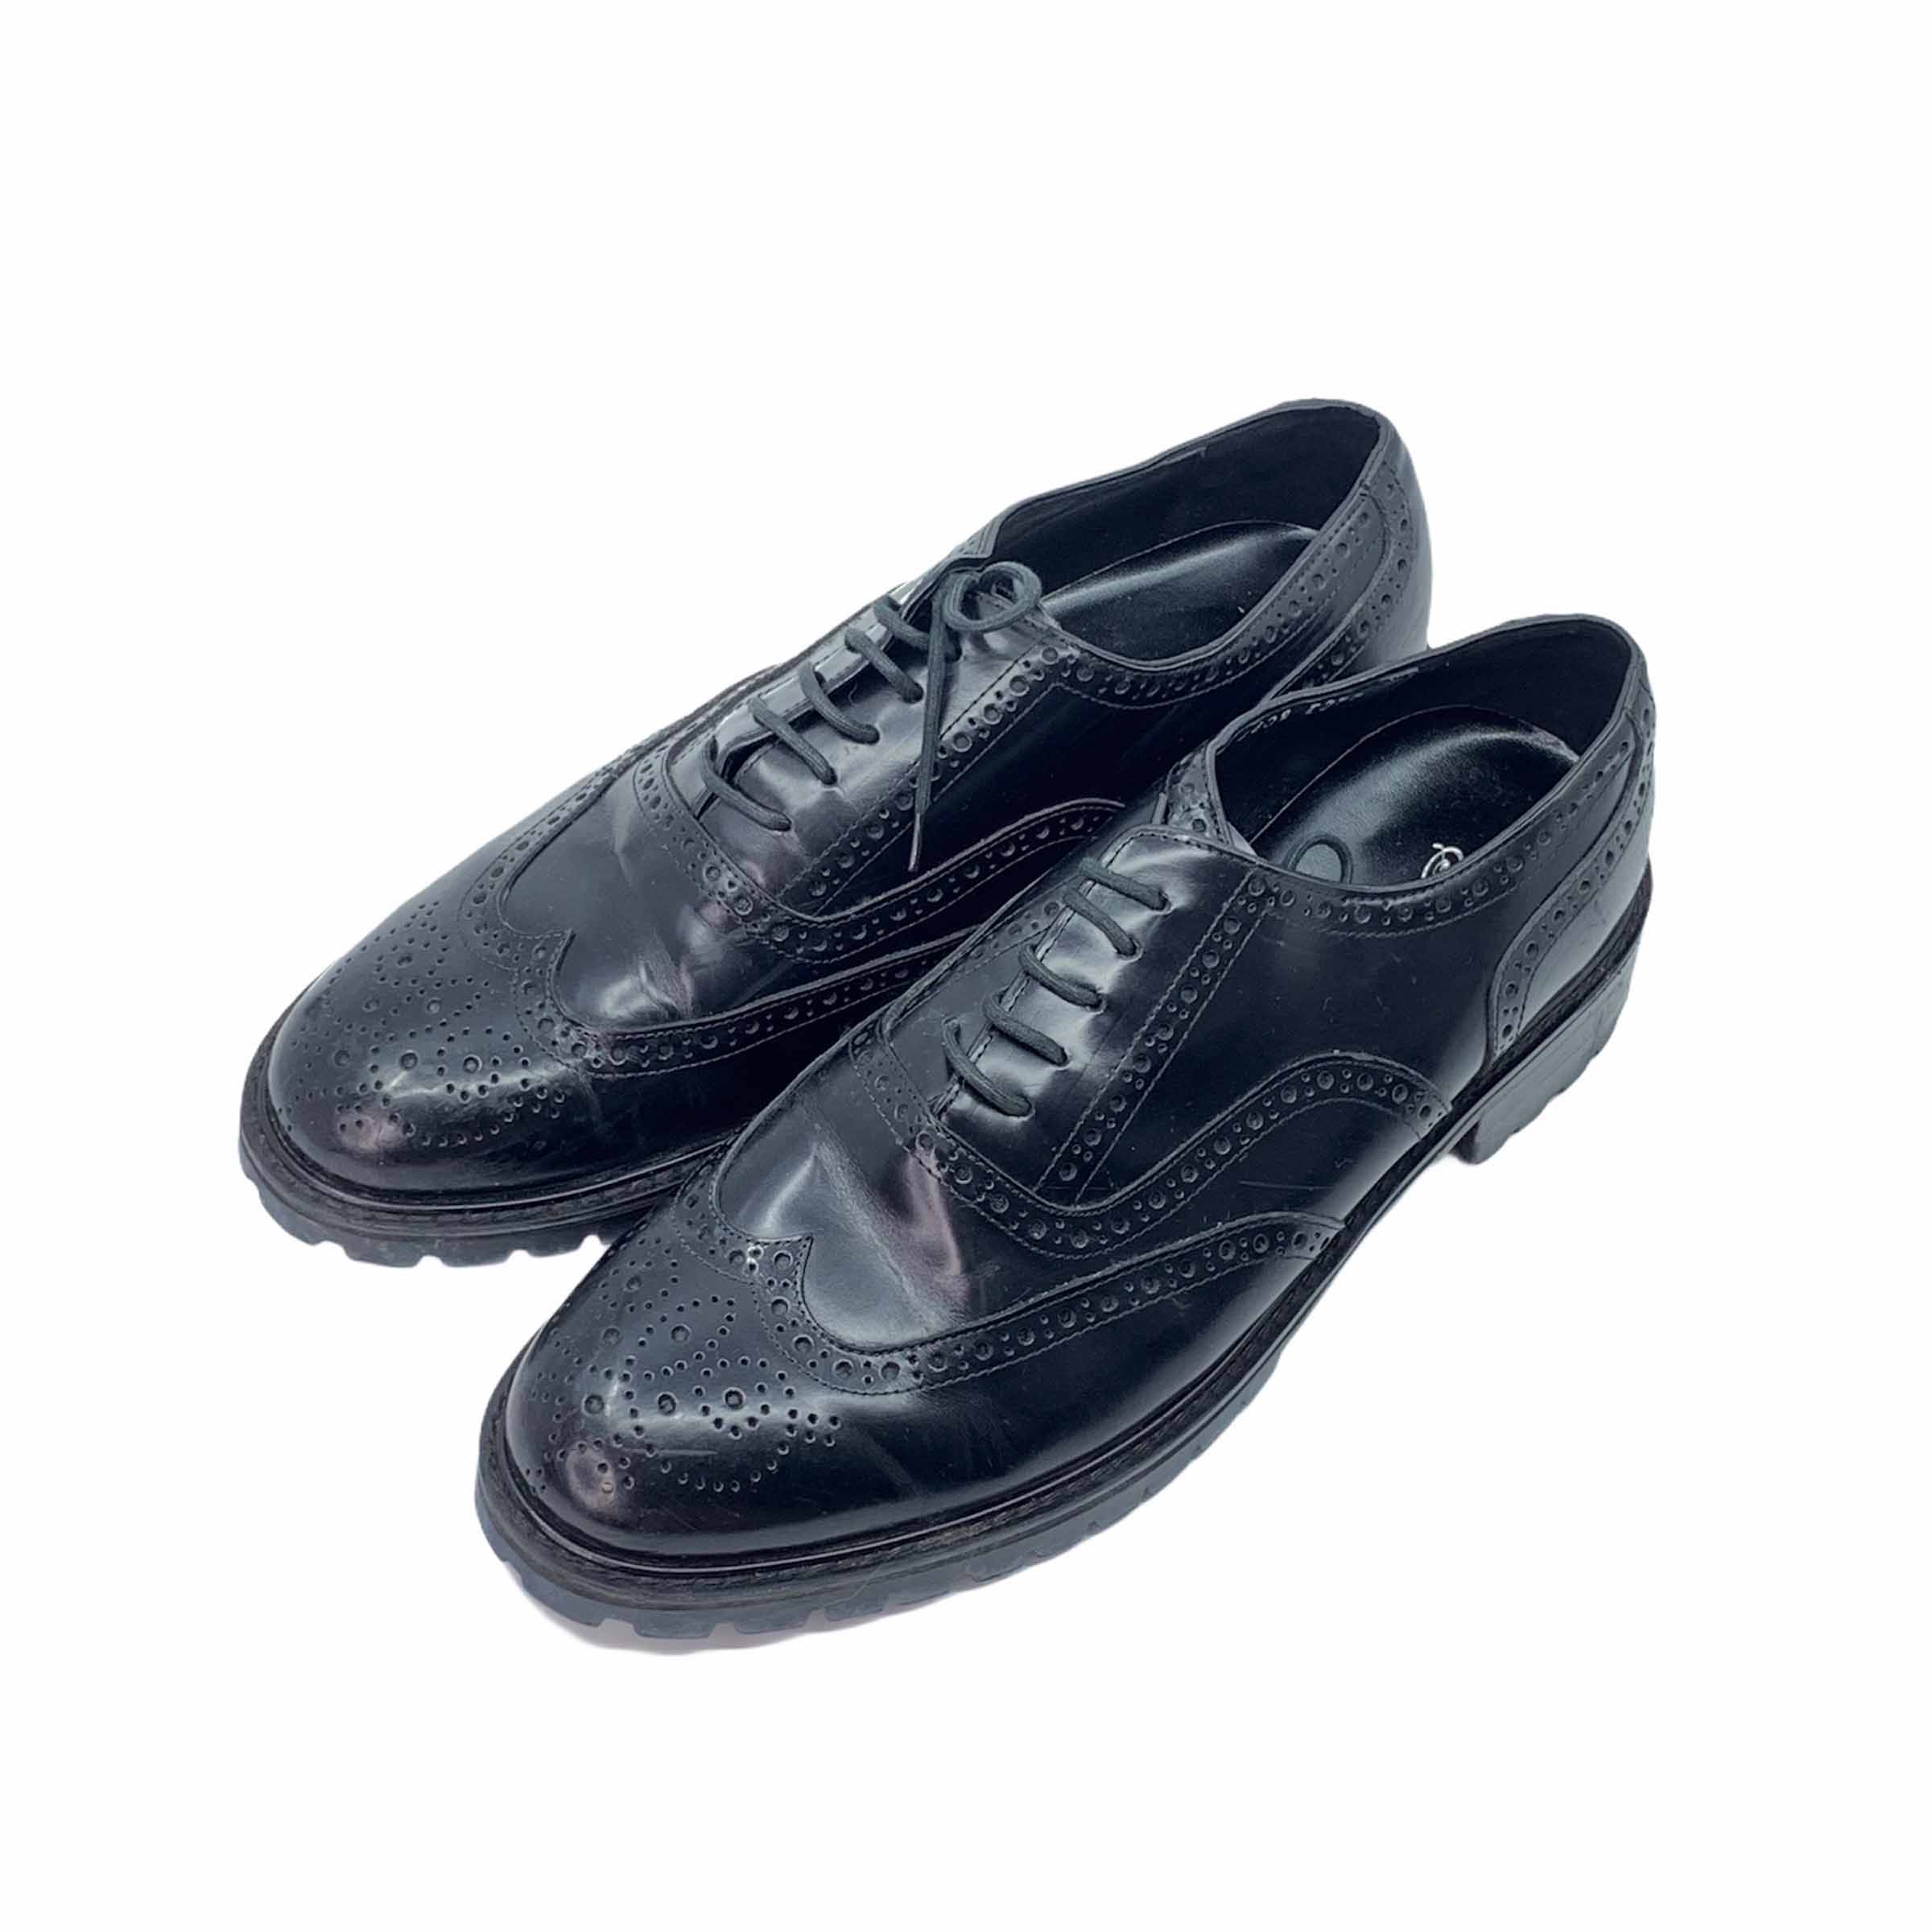 [S-Rush] Wingtip Dress Shoes BK - Size 270